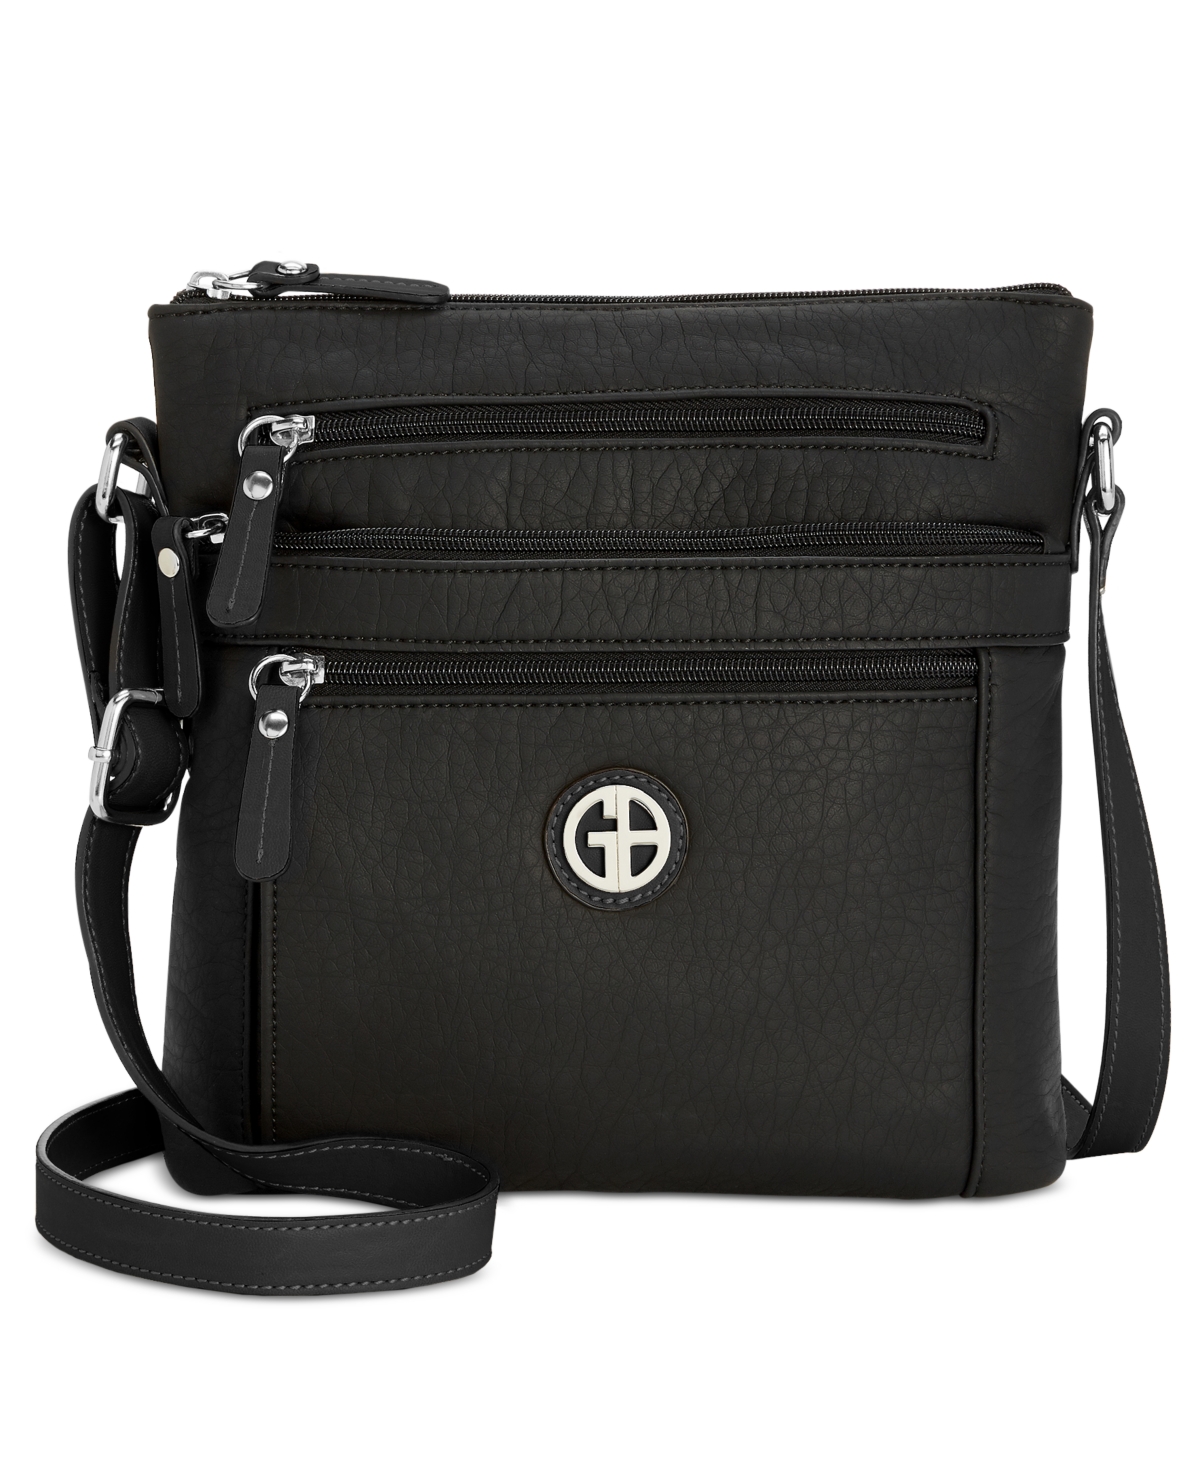 Giani Bernini Leather Color Block Medium Handbag Tote Purse Brown Gray bv